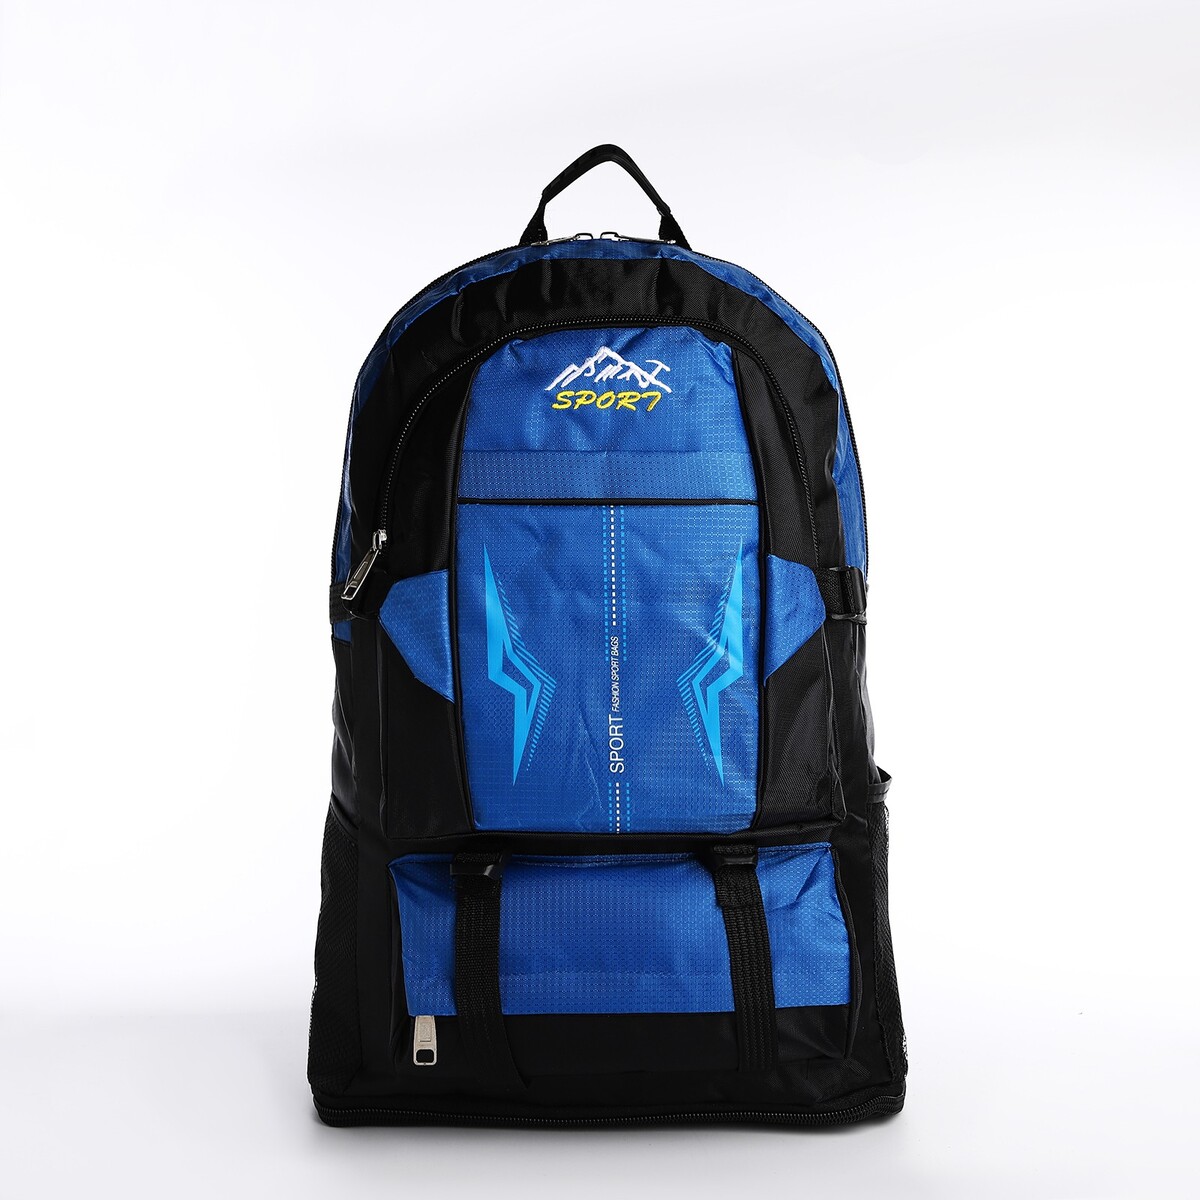 Рюкзак на молнии с увеличением, 65л, 4 наружных кармана, цвет синий рюкзак на молнии 2 наружных кармана синий